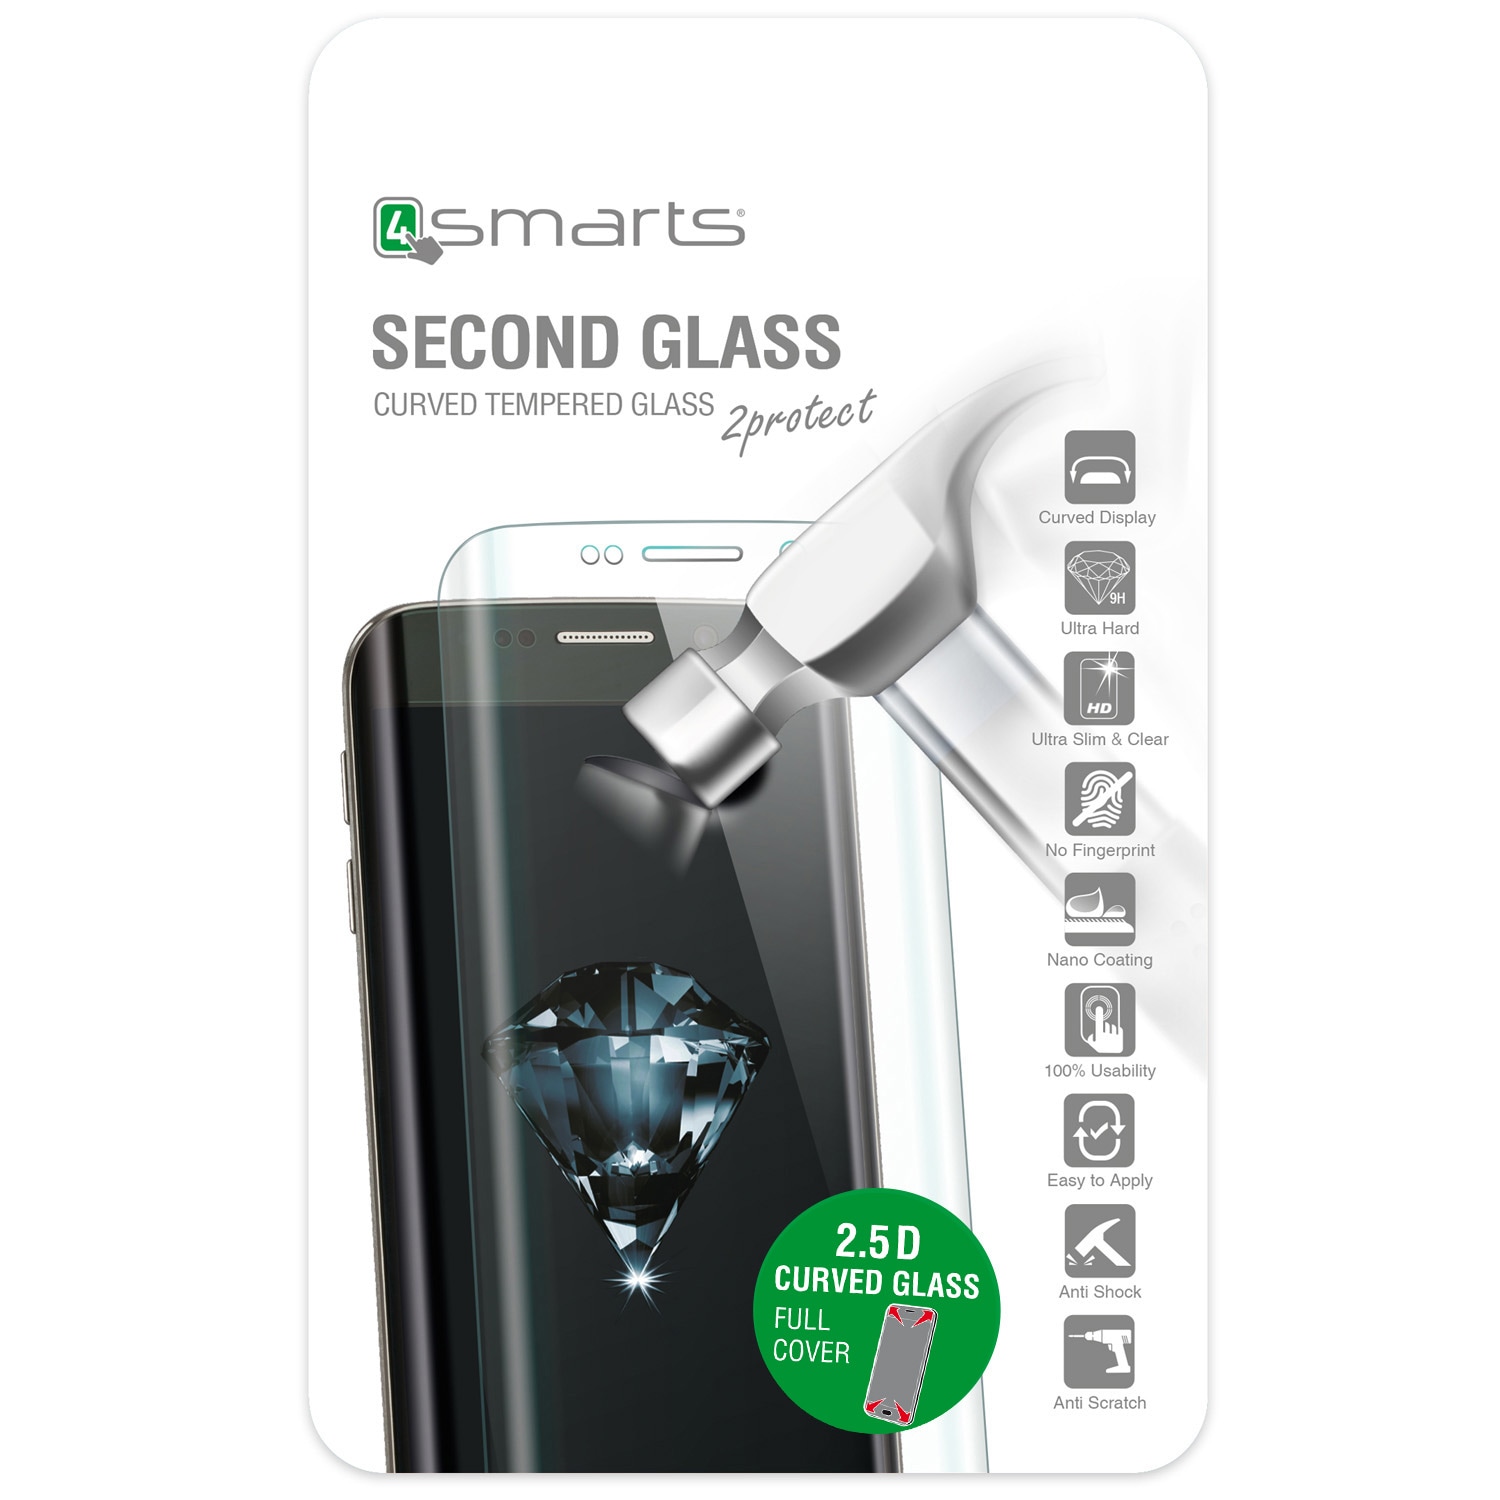 4smarts Second Glass Curved 2.5D til iPhone 8 / 7 - Guld